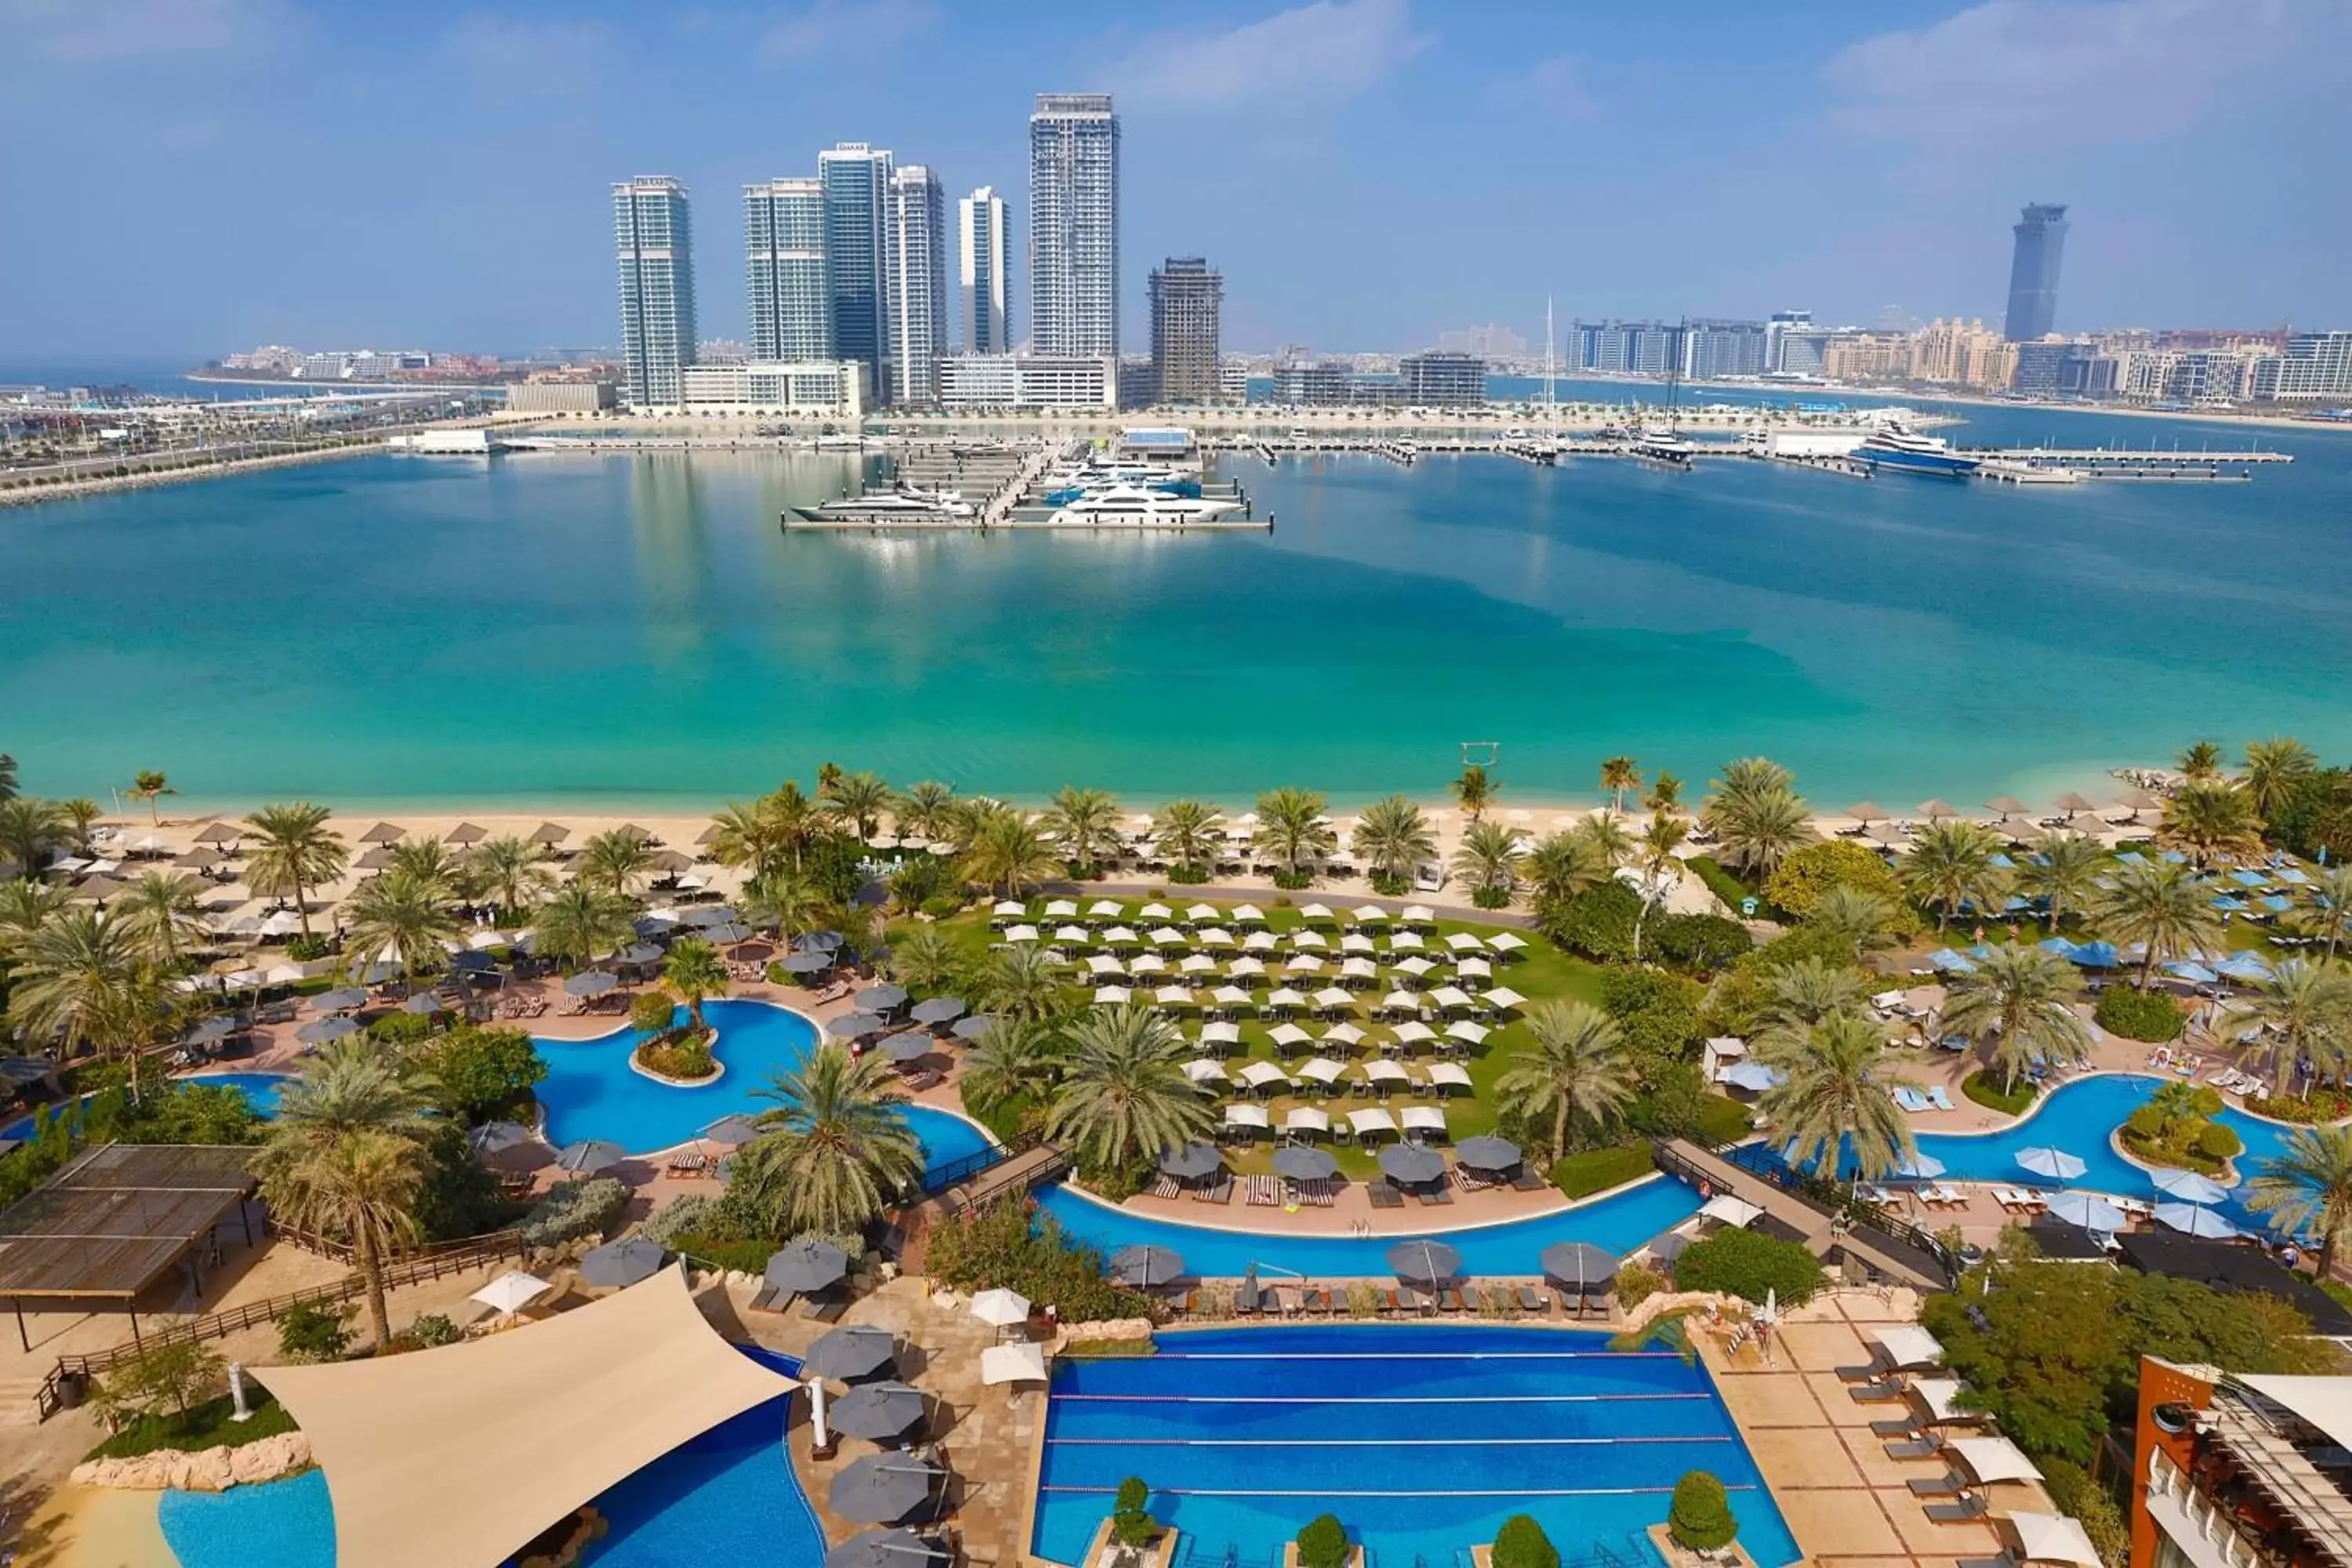 Area and facilities, Pool View in The Westin Dubai Mina Seyahi Beach Resort and Waterpark